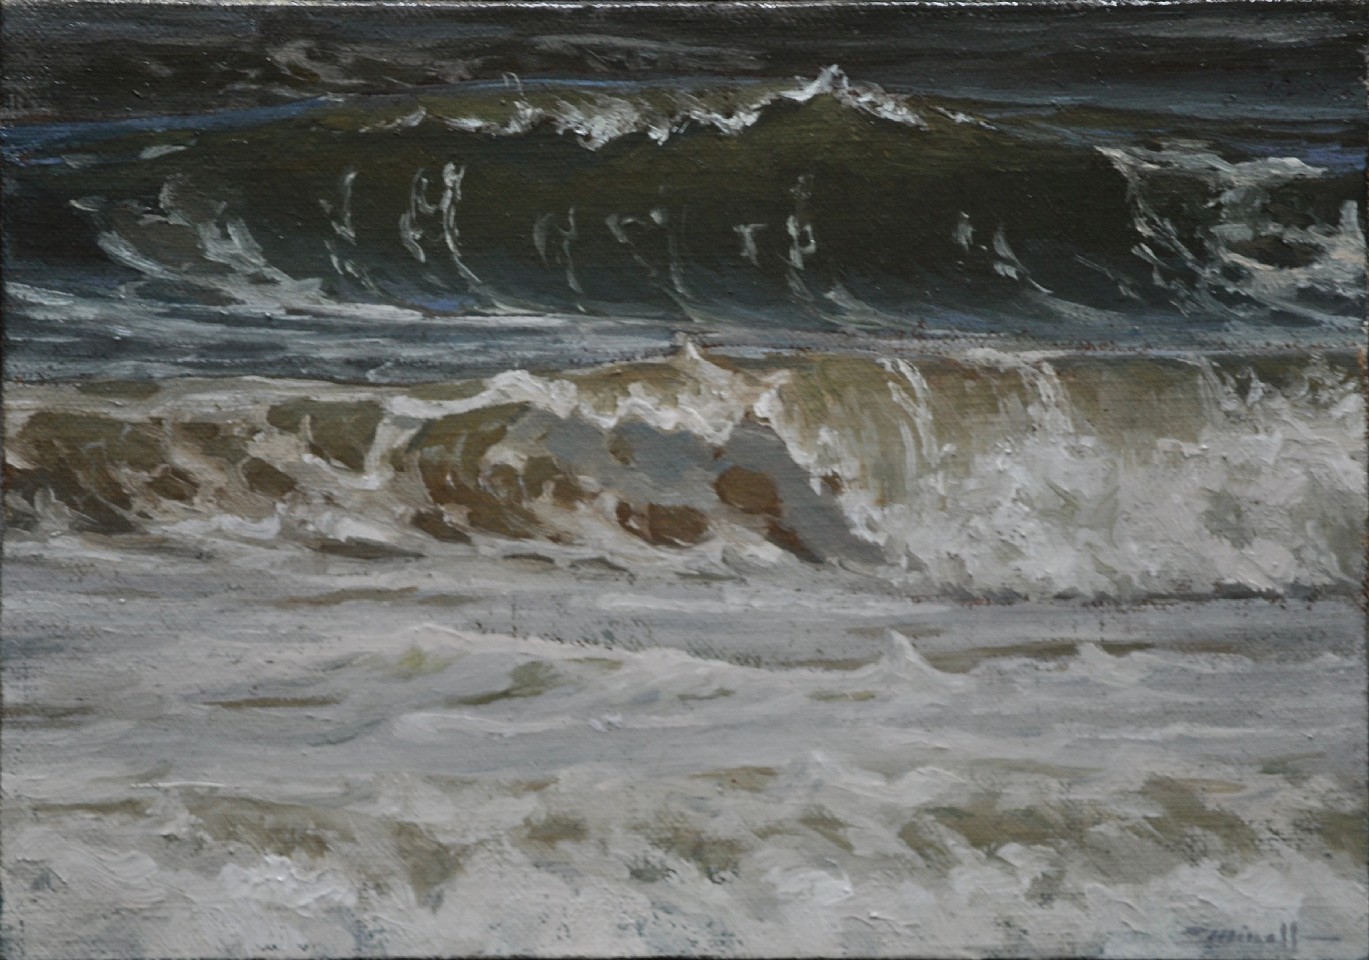 Edward Minoff, Storm Surf, 2018
oil on linen on panel, 5 x 7 in. (12.7 x 17.8 cm)
EM181019